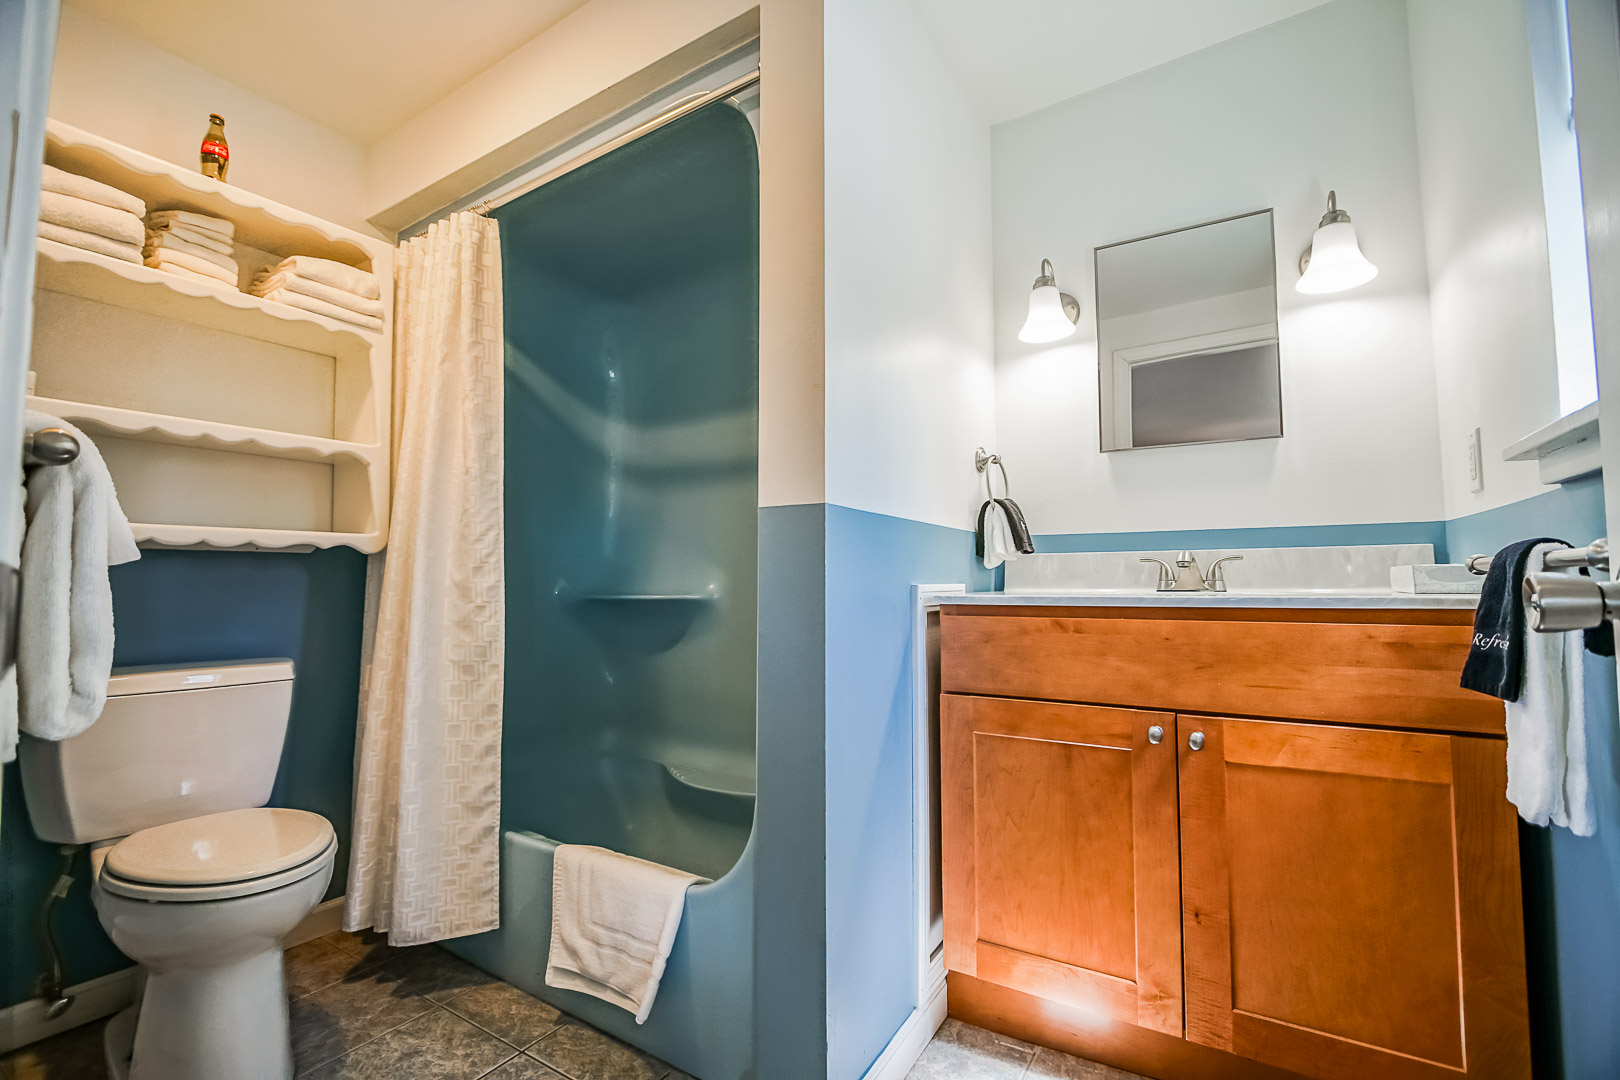 A cozy bathroom  at VRI's Neptune House Resort in Rhode Island.